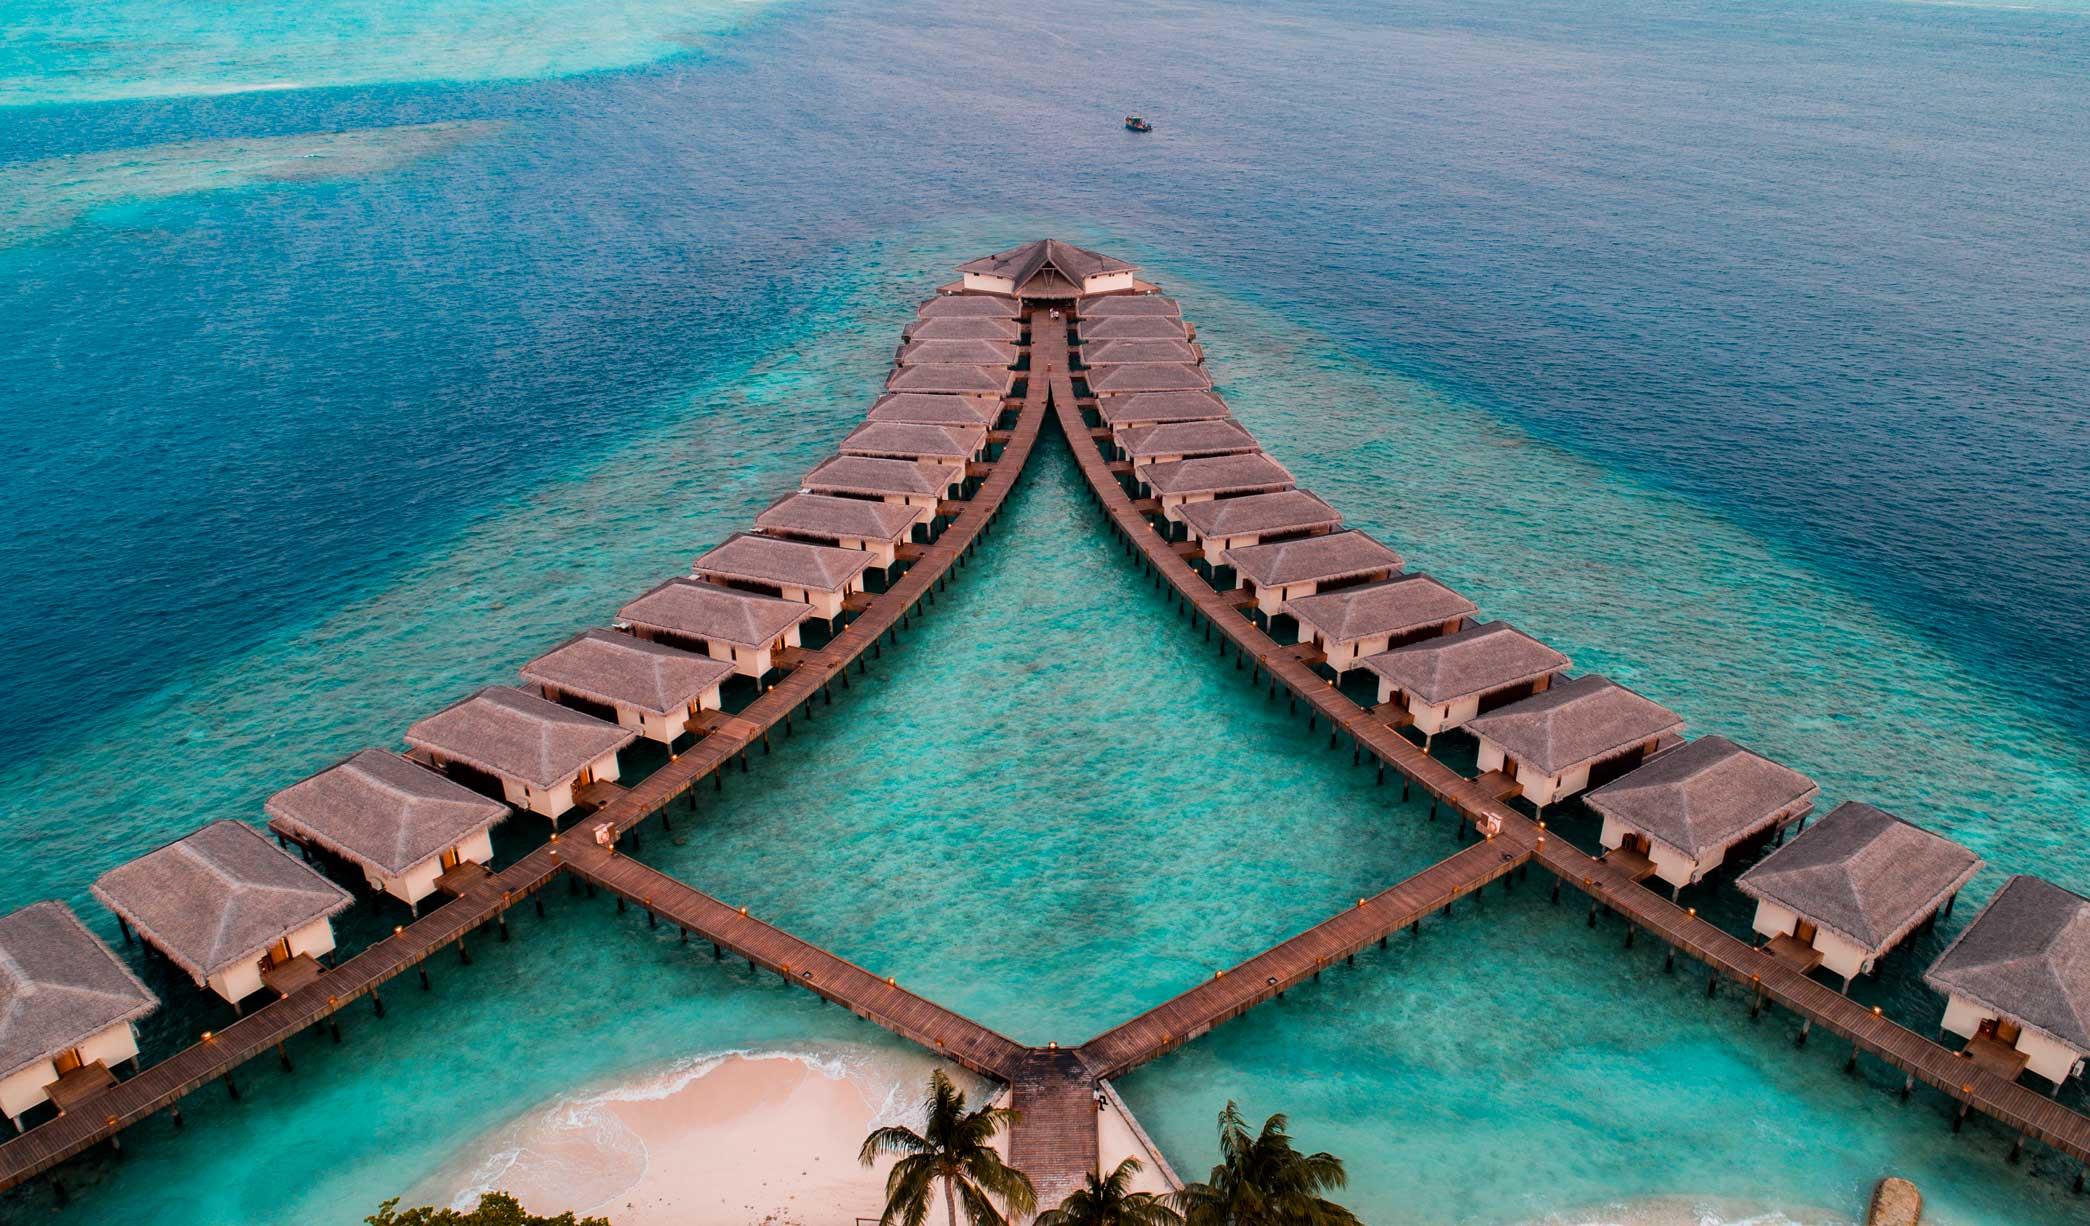 Dhiggiri Resort Maldives